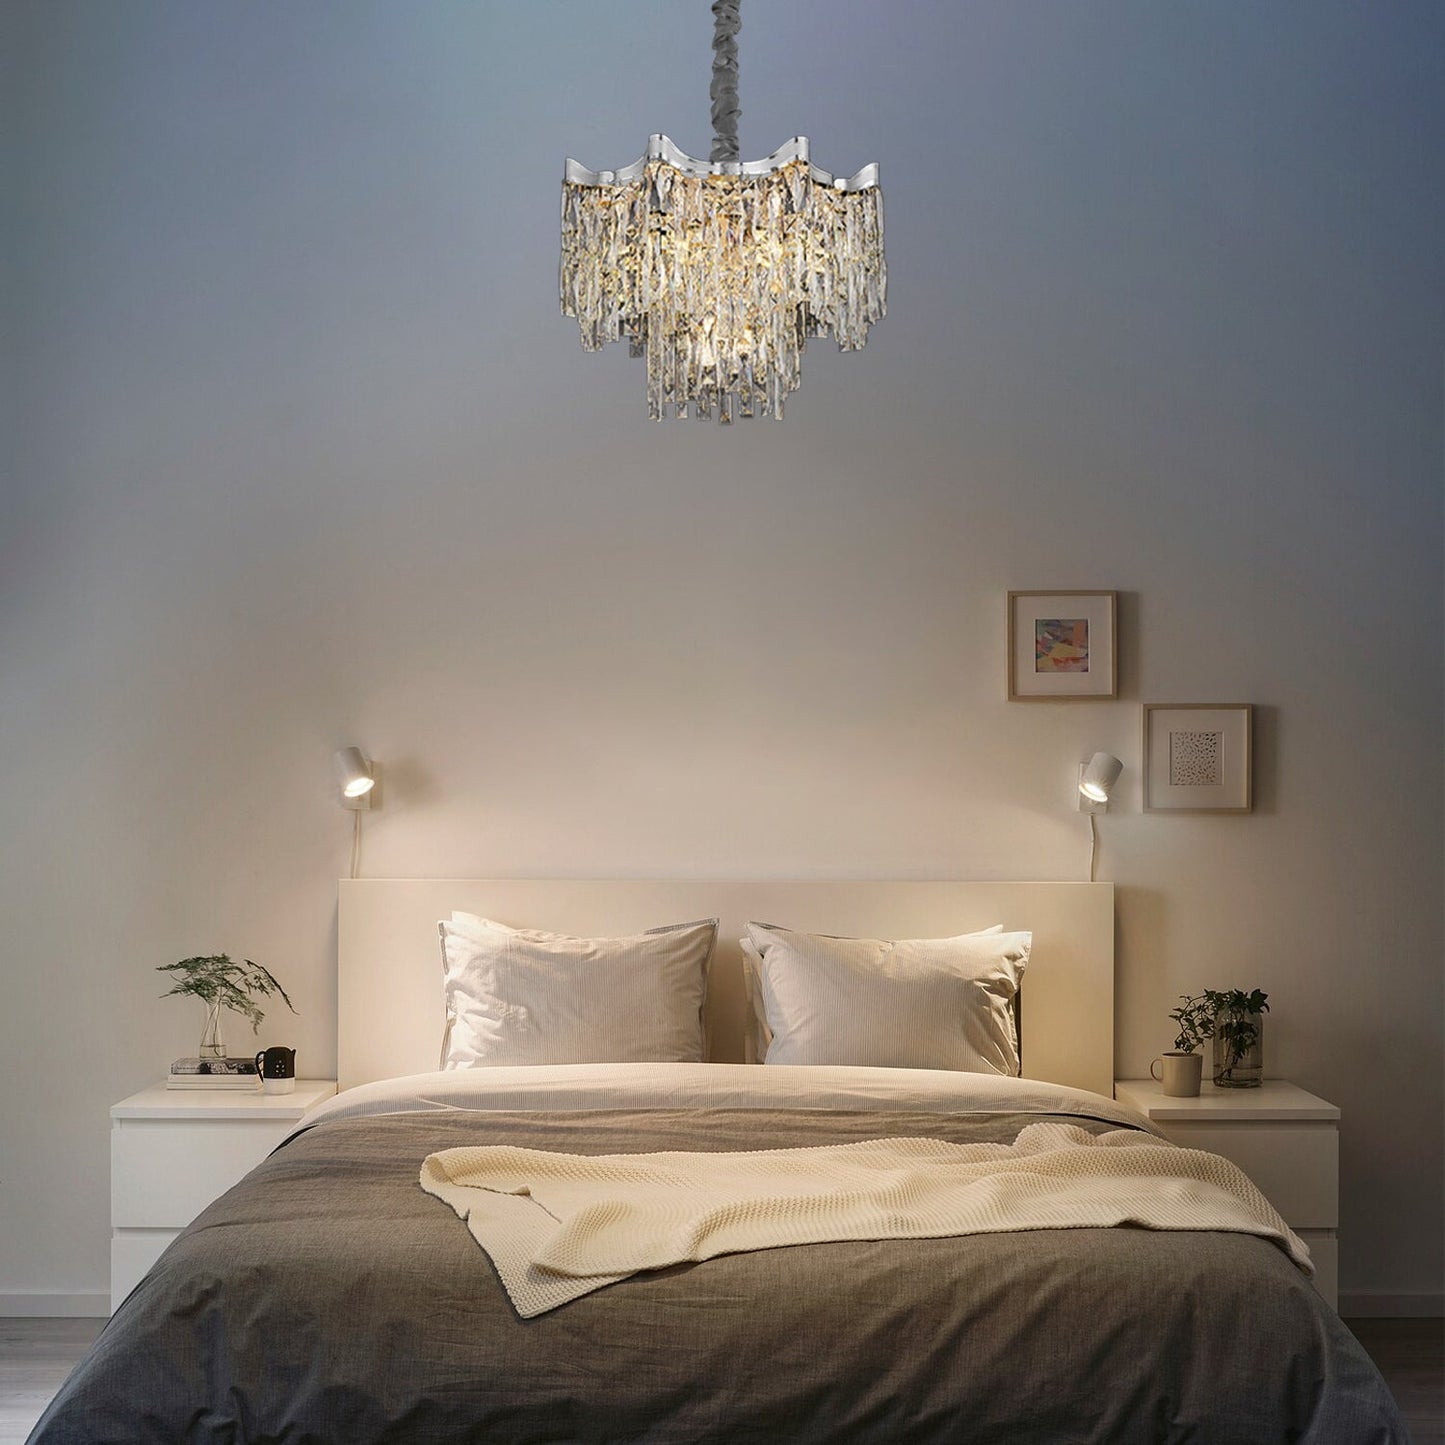 Modern Crystal Chandelier Hanging Living Room Dining Room Lighting Luxury~3626